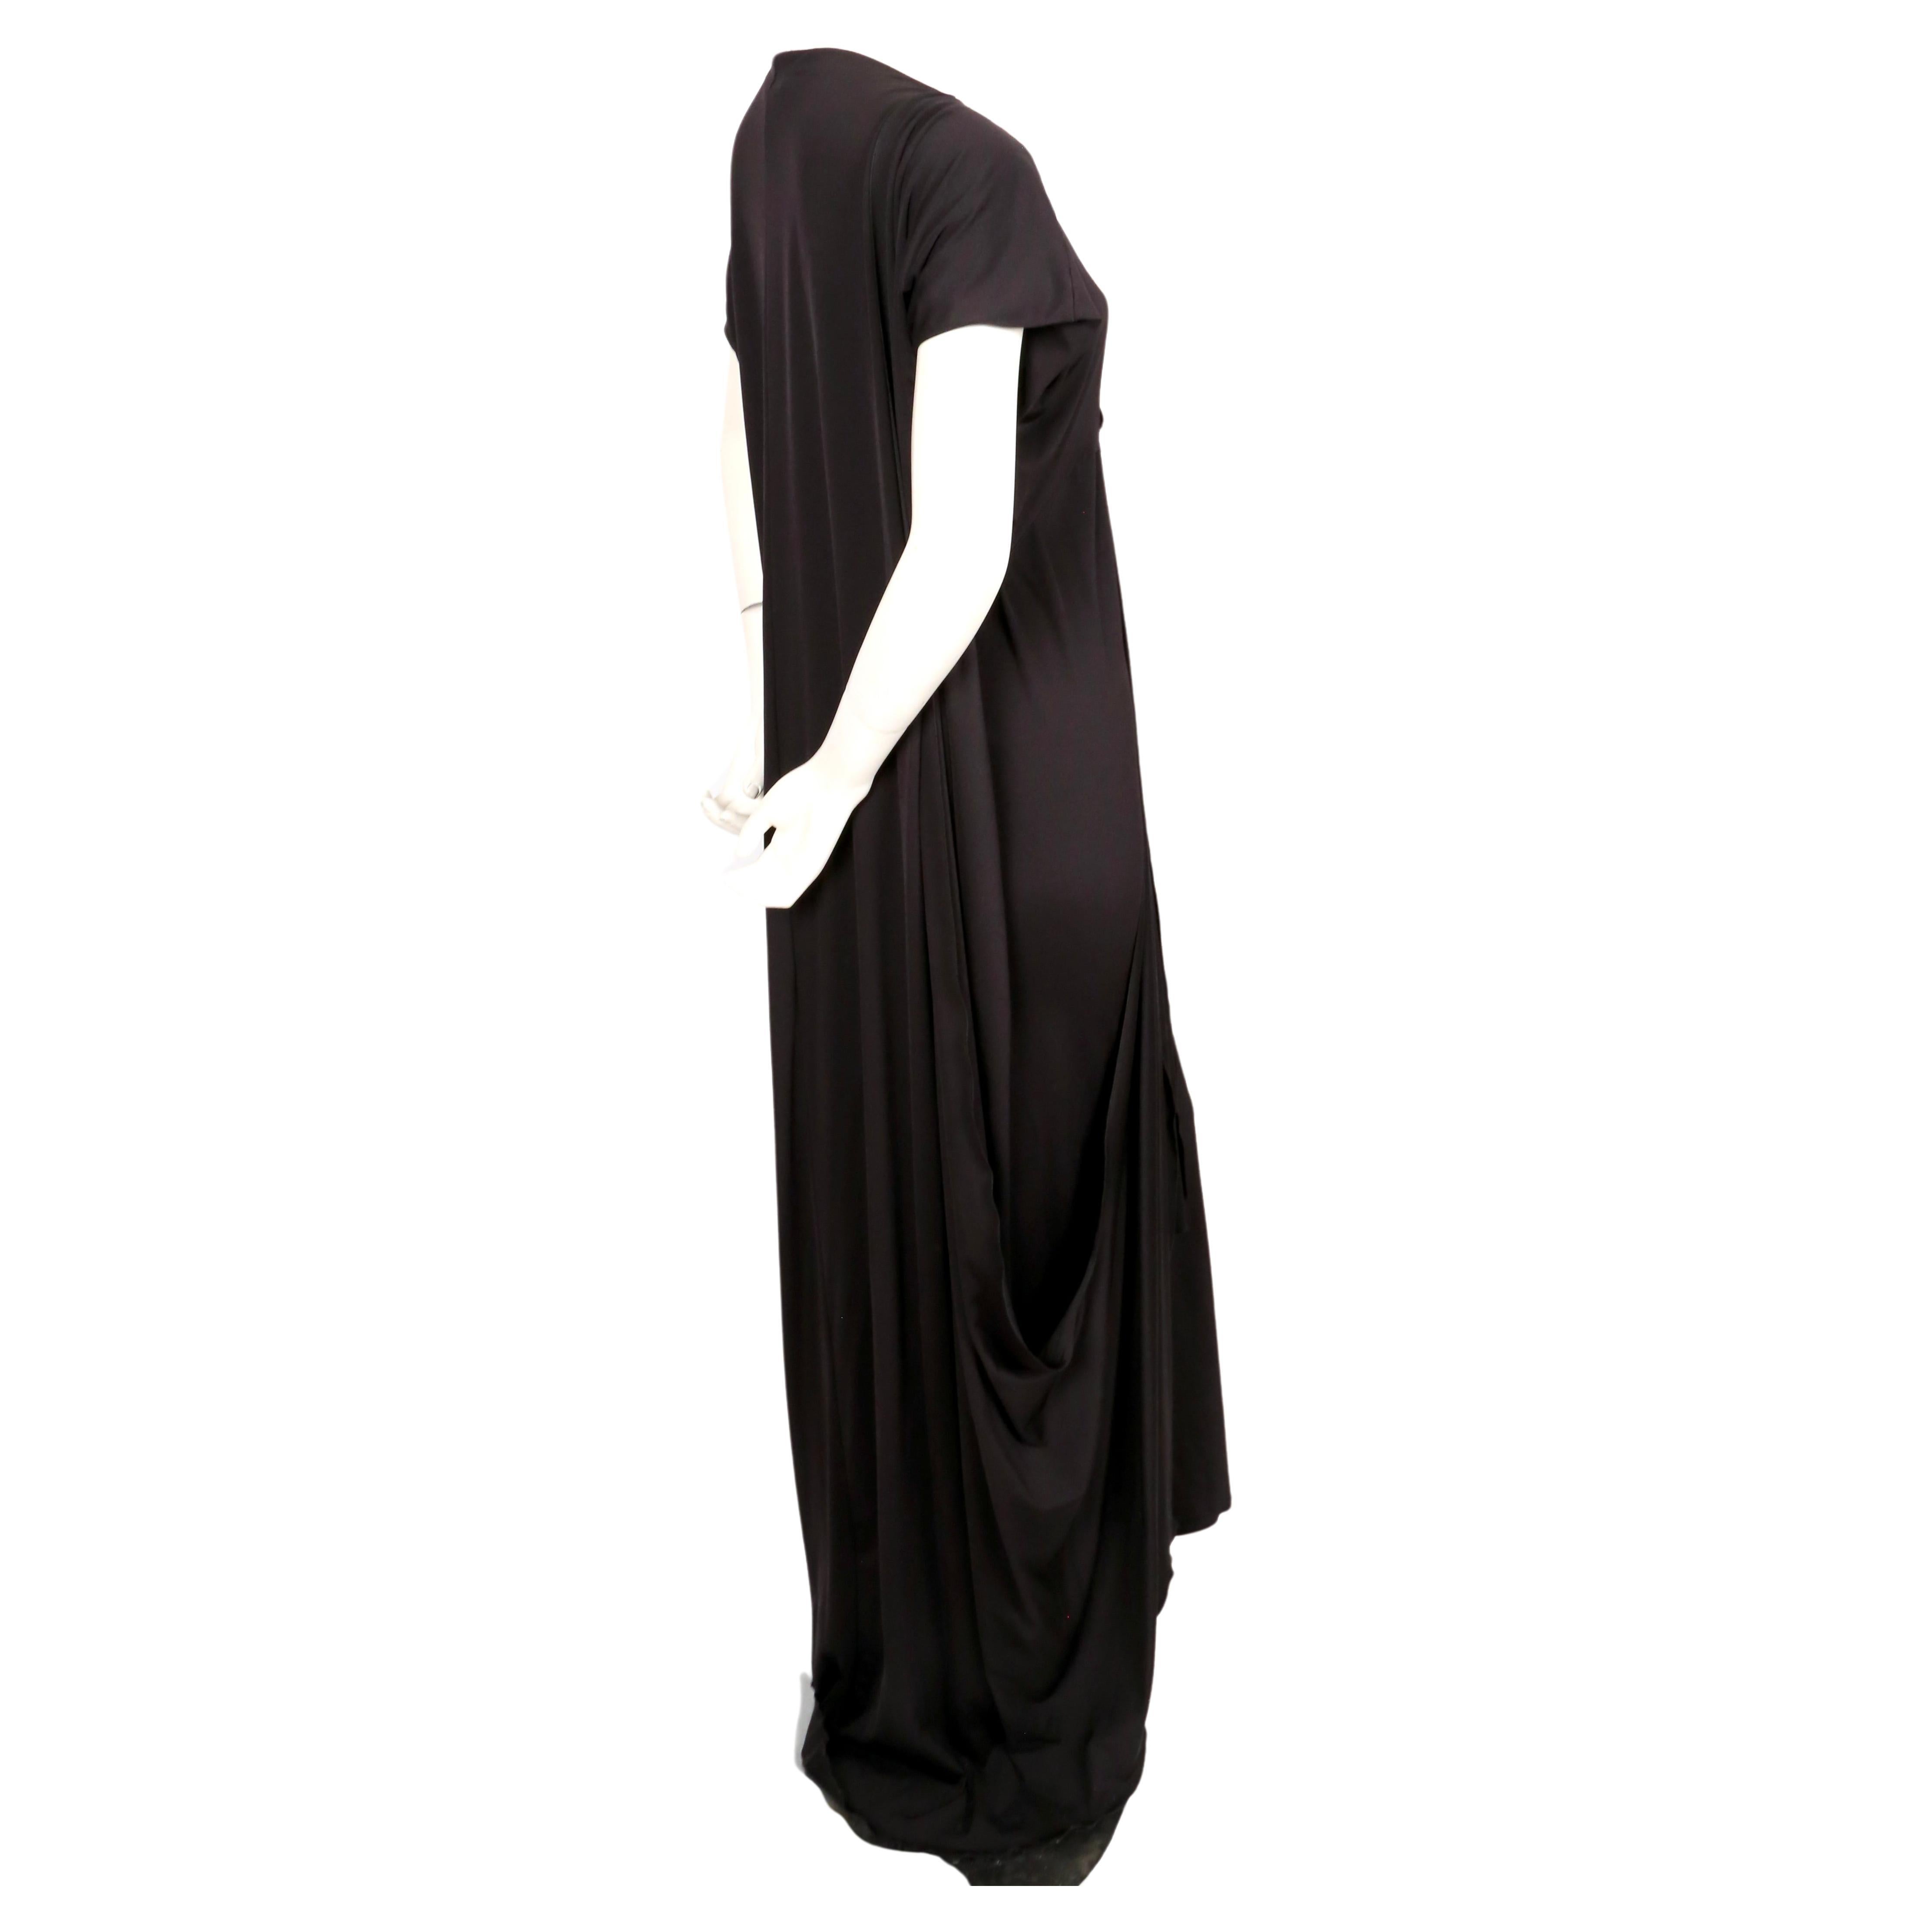 YVES SAINT LAURENT by Stefano Pilati black draped caftan dress For Sale 1